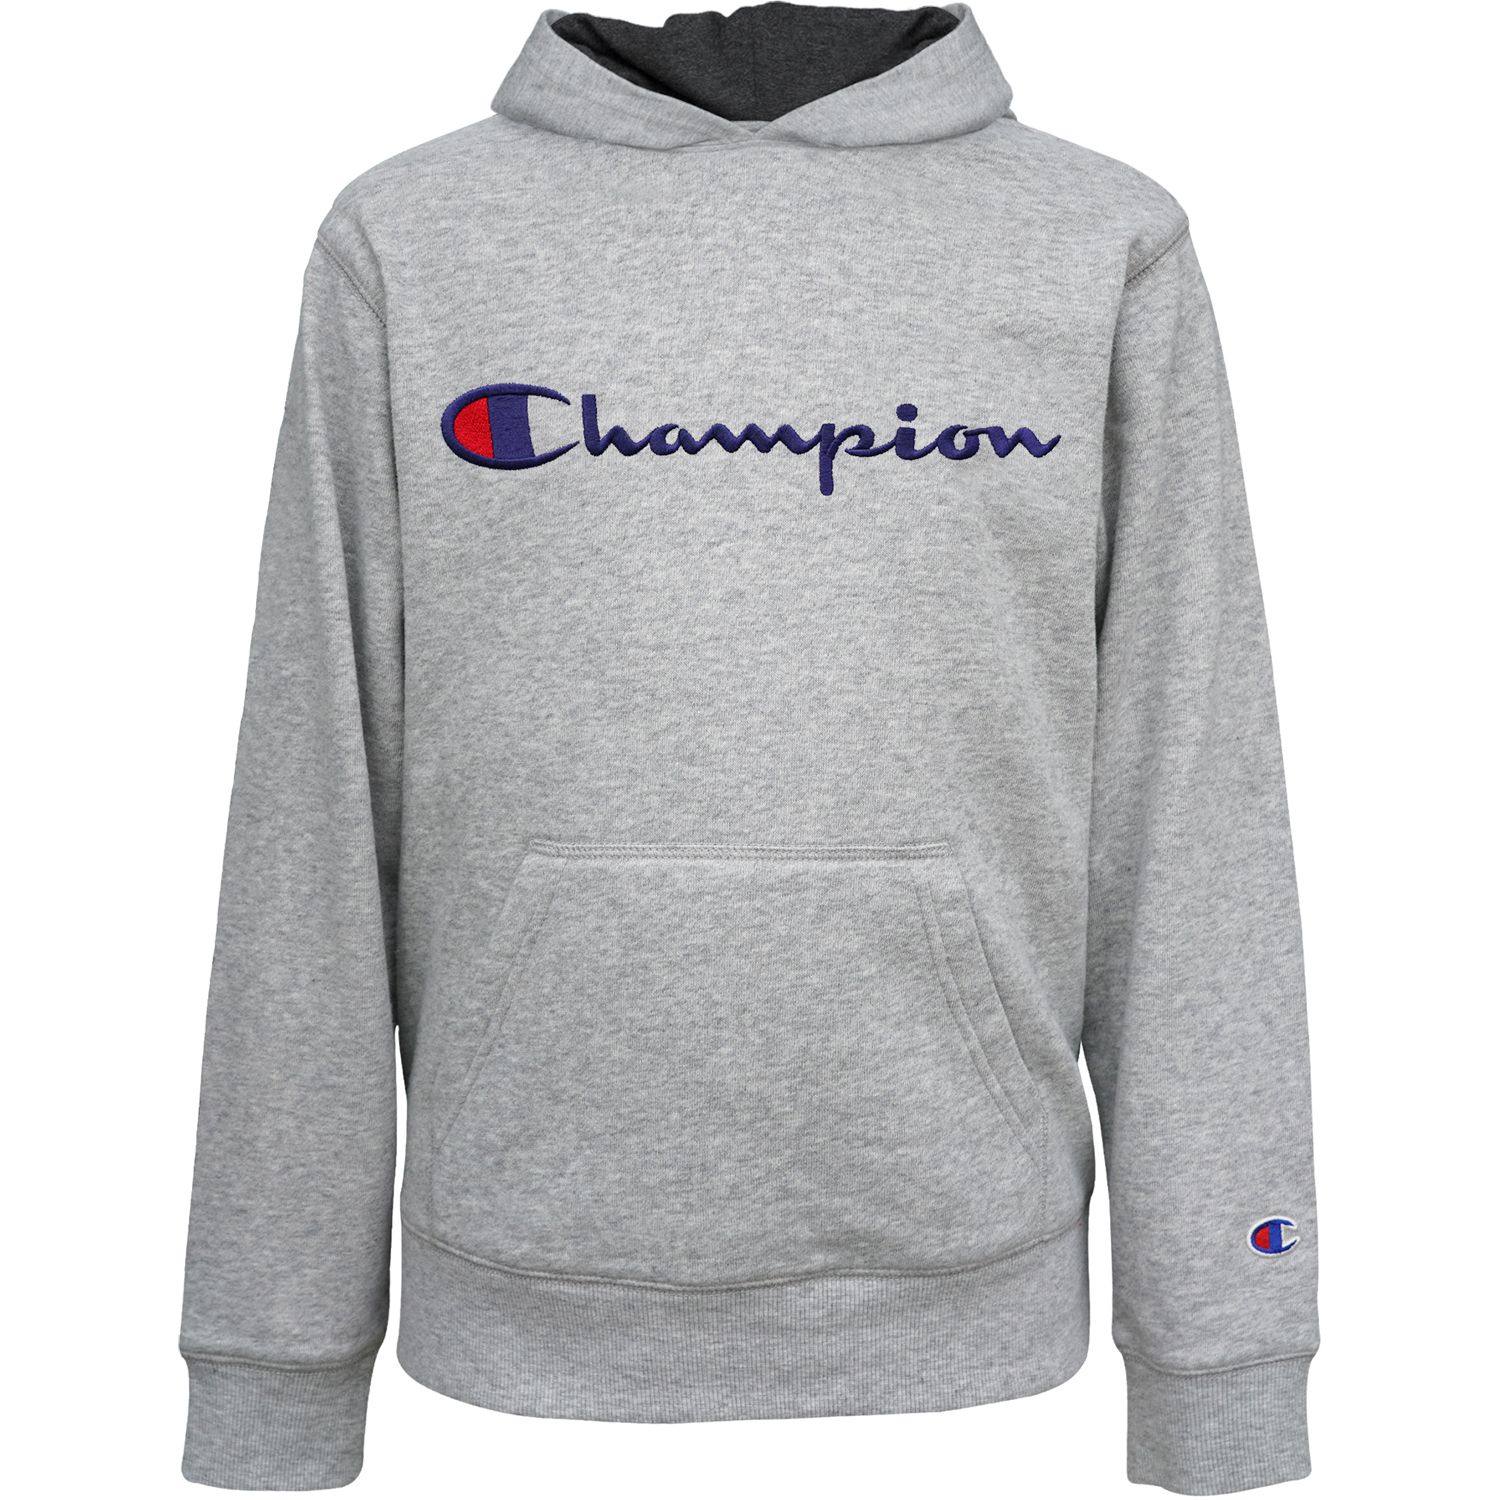 kohl's champion hoodie